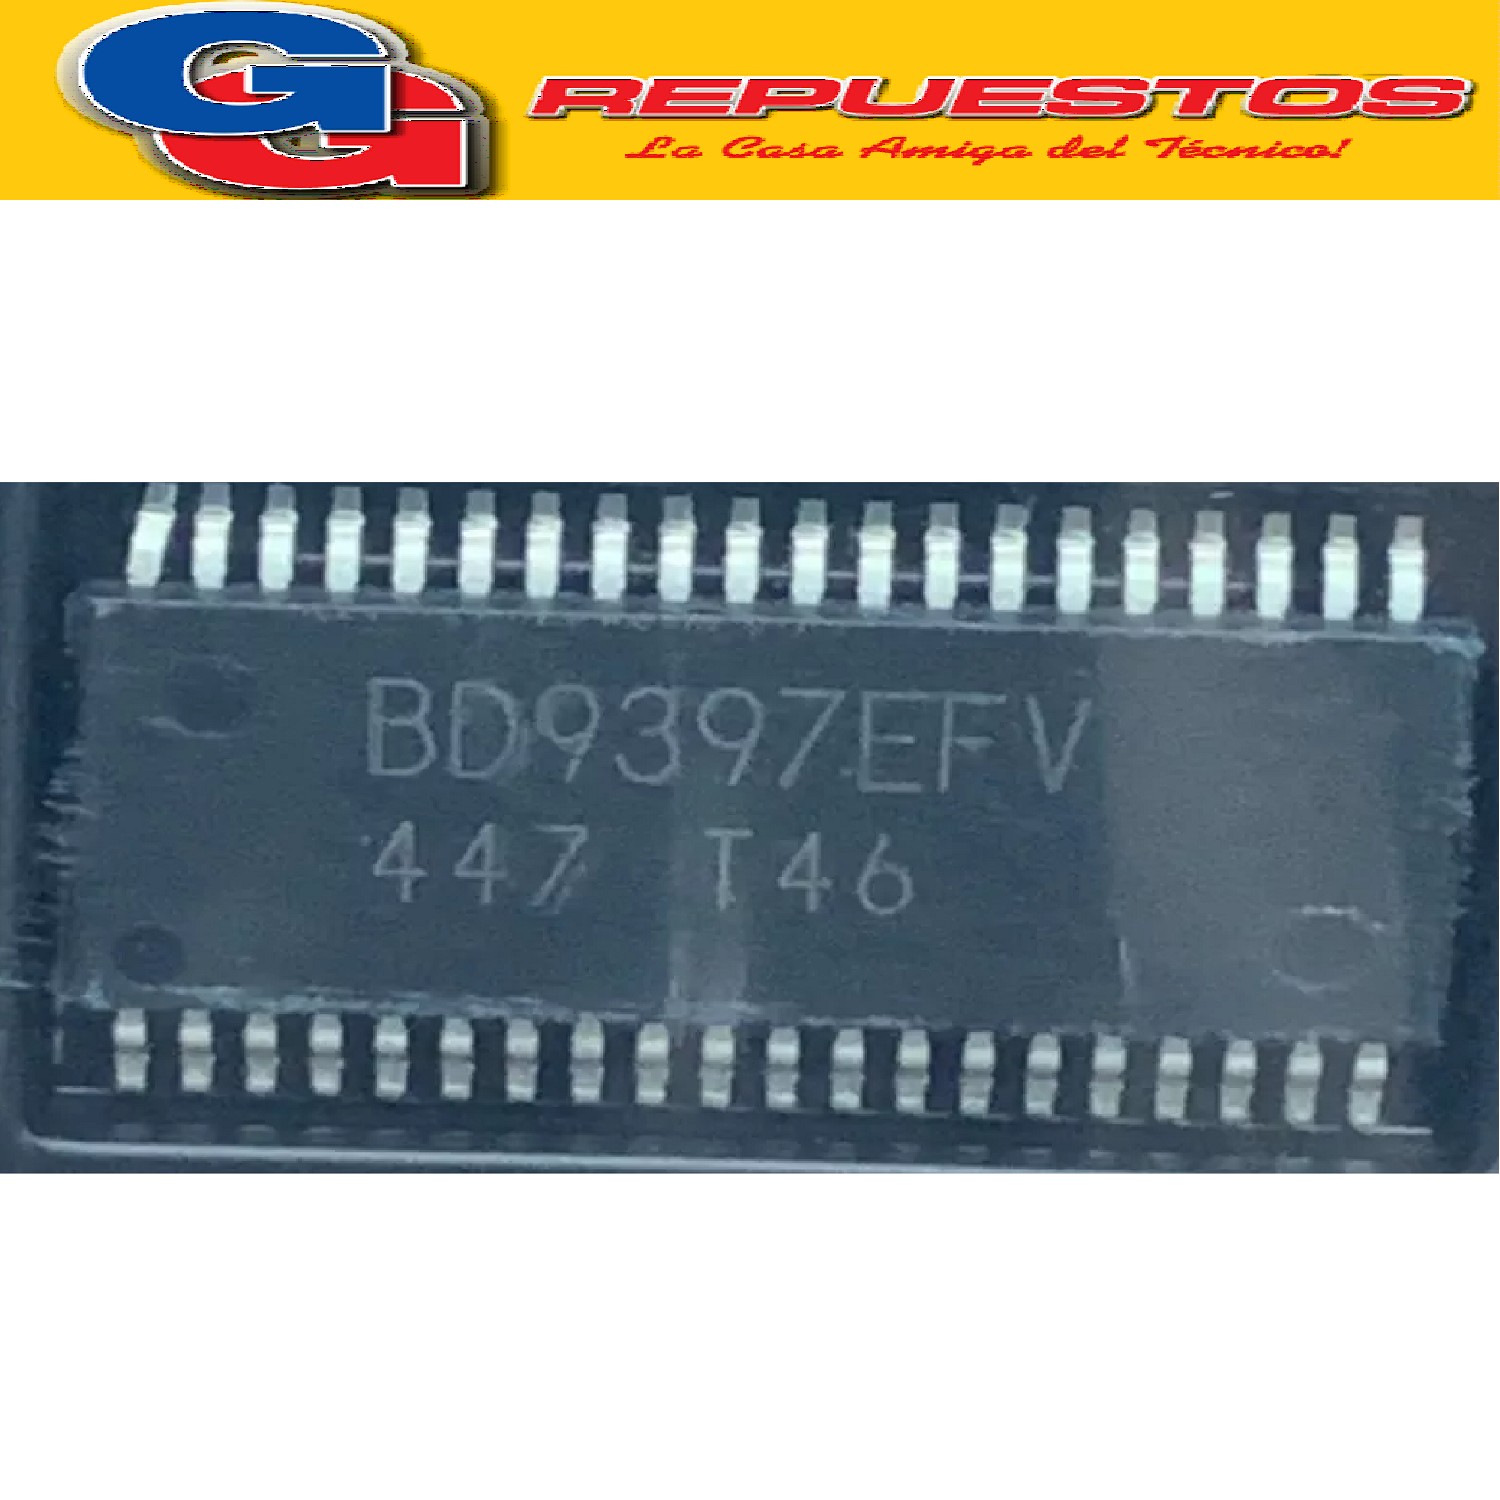 BD9397EFV CIRCUITO INTEGRADO SMD White LED Driver for large  LCD panel